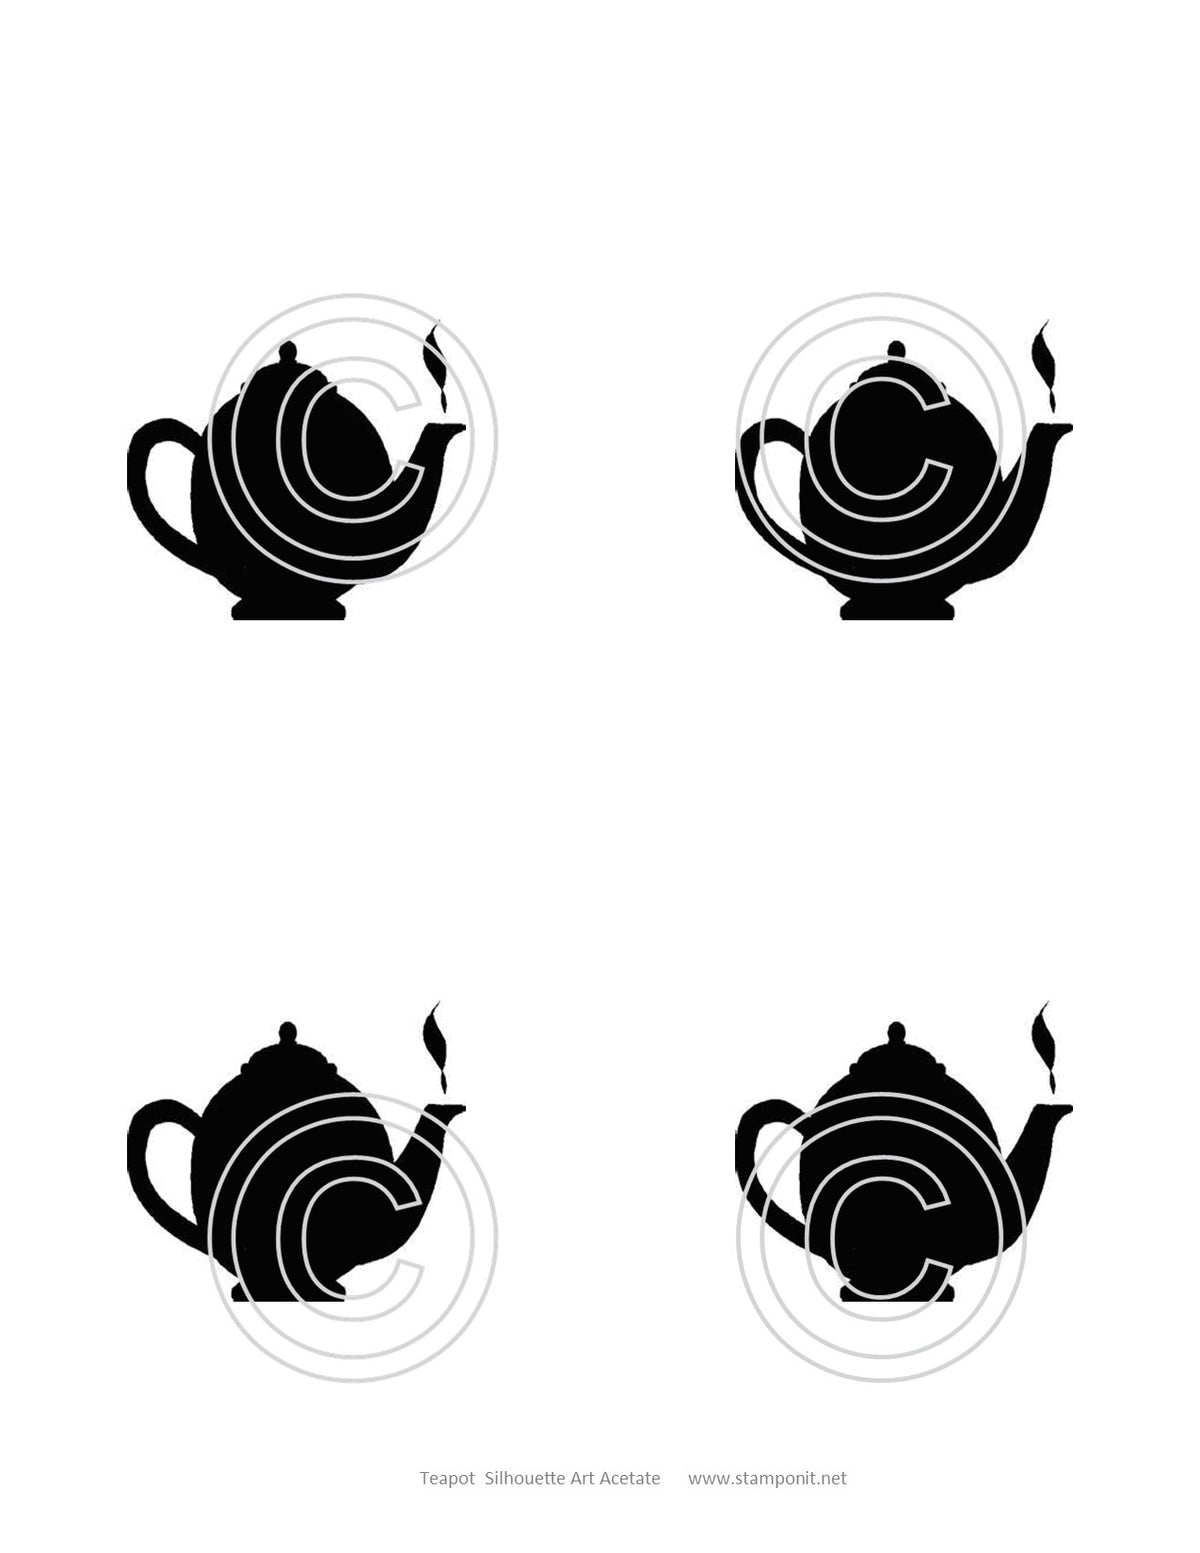 Teapot Art Acetate Silhouette